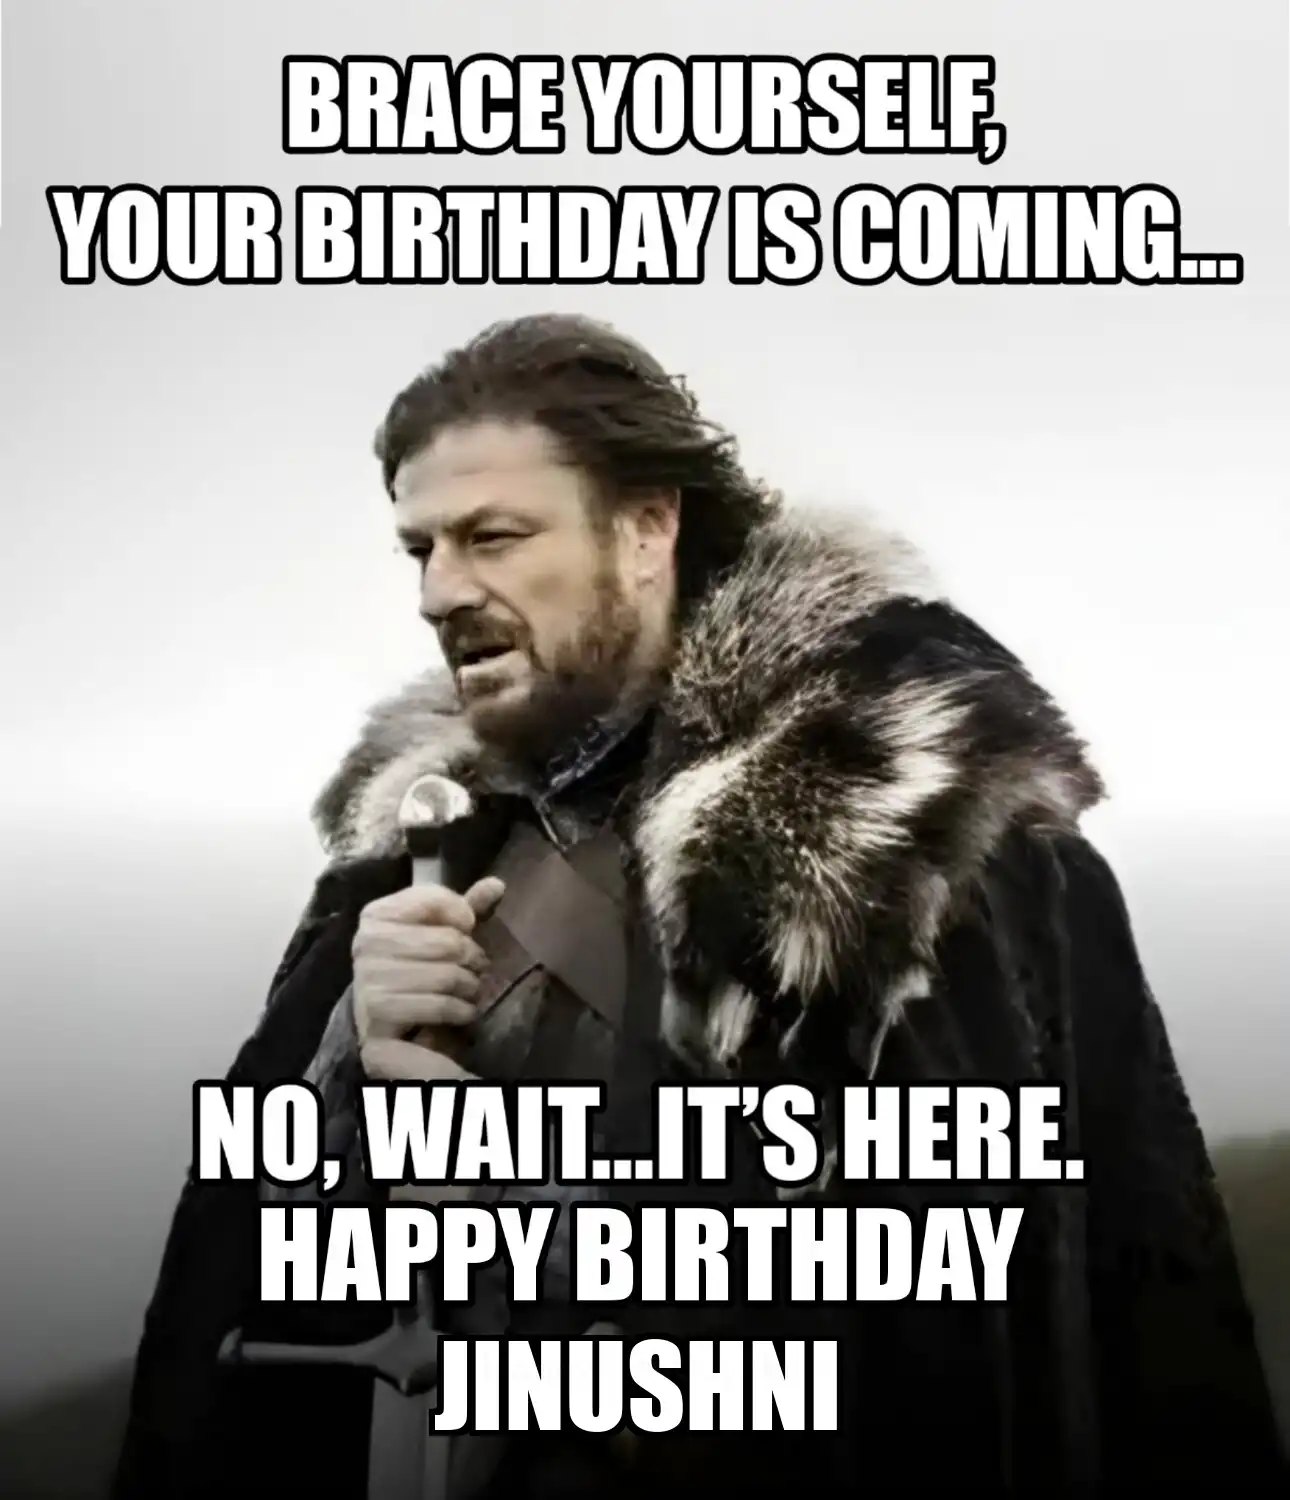 Happy Birthday Jinushni Brace Yourself Your Birthday Is Coming Meme